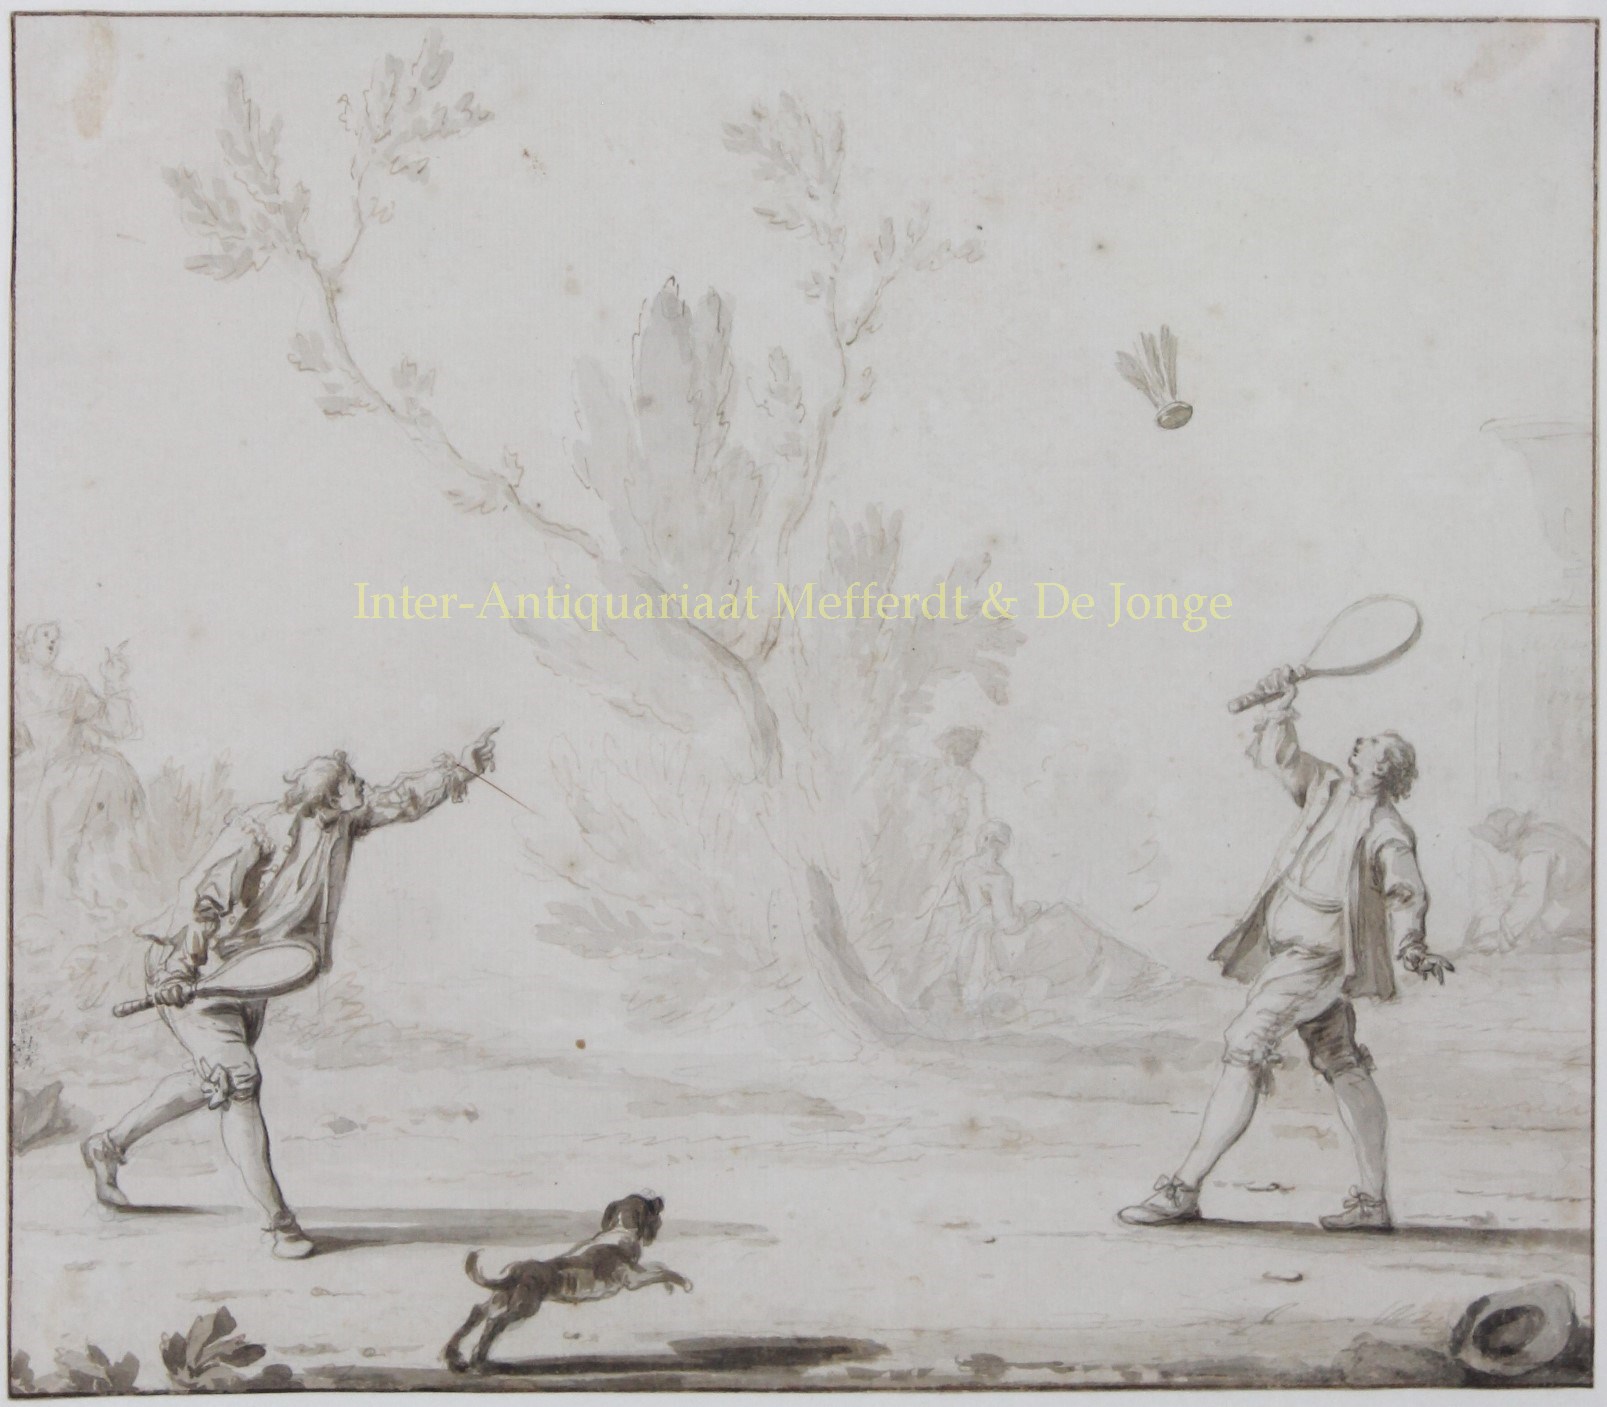  - Badminton - Johann Heinrich Keller, 1743